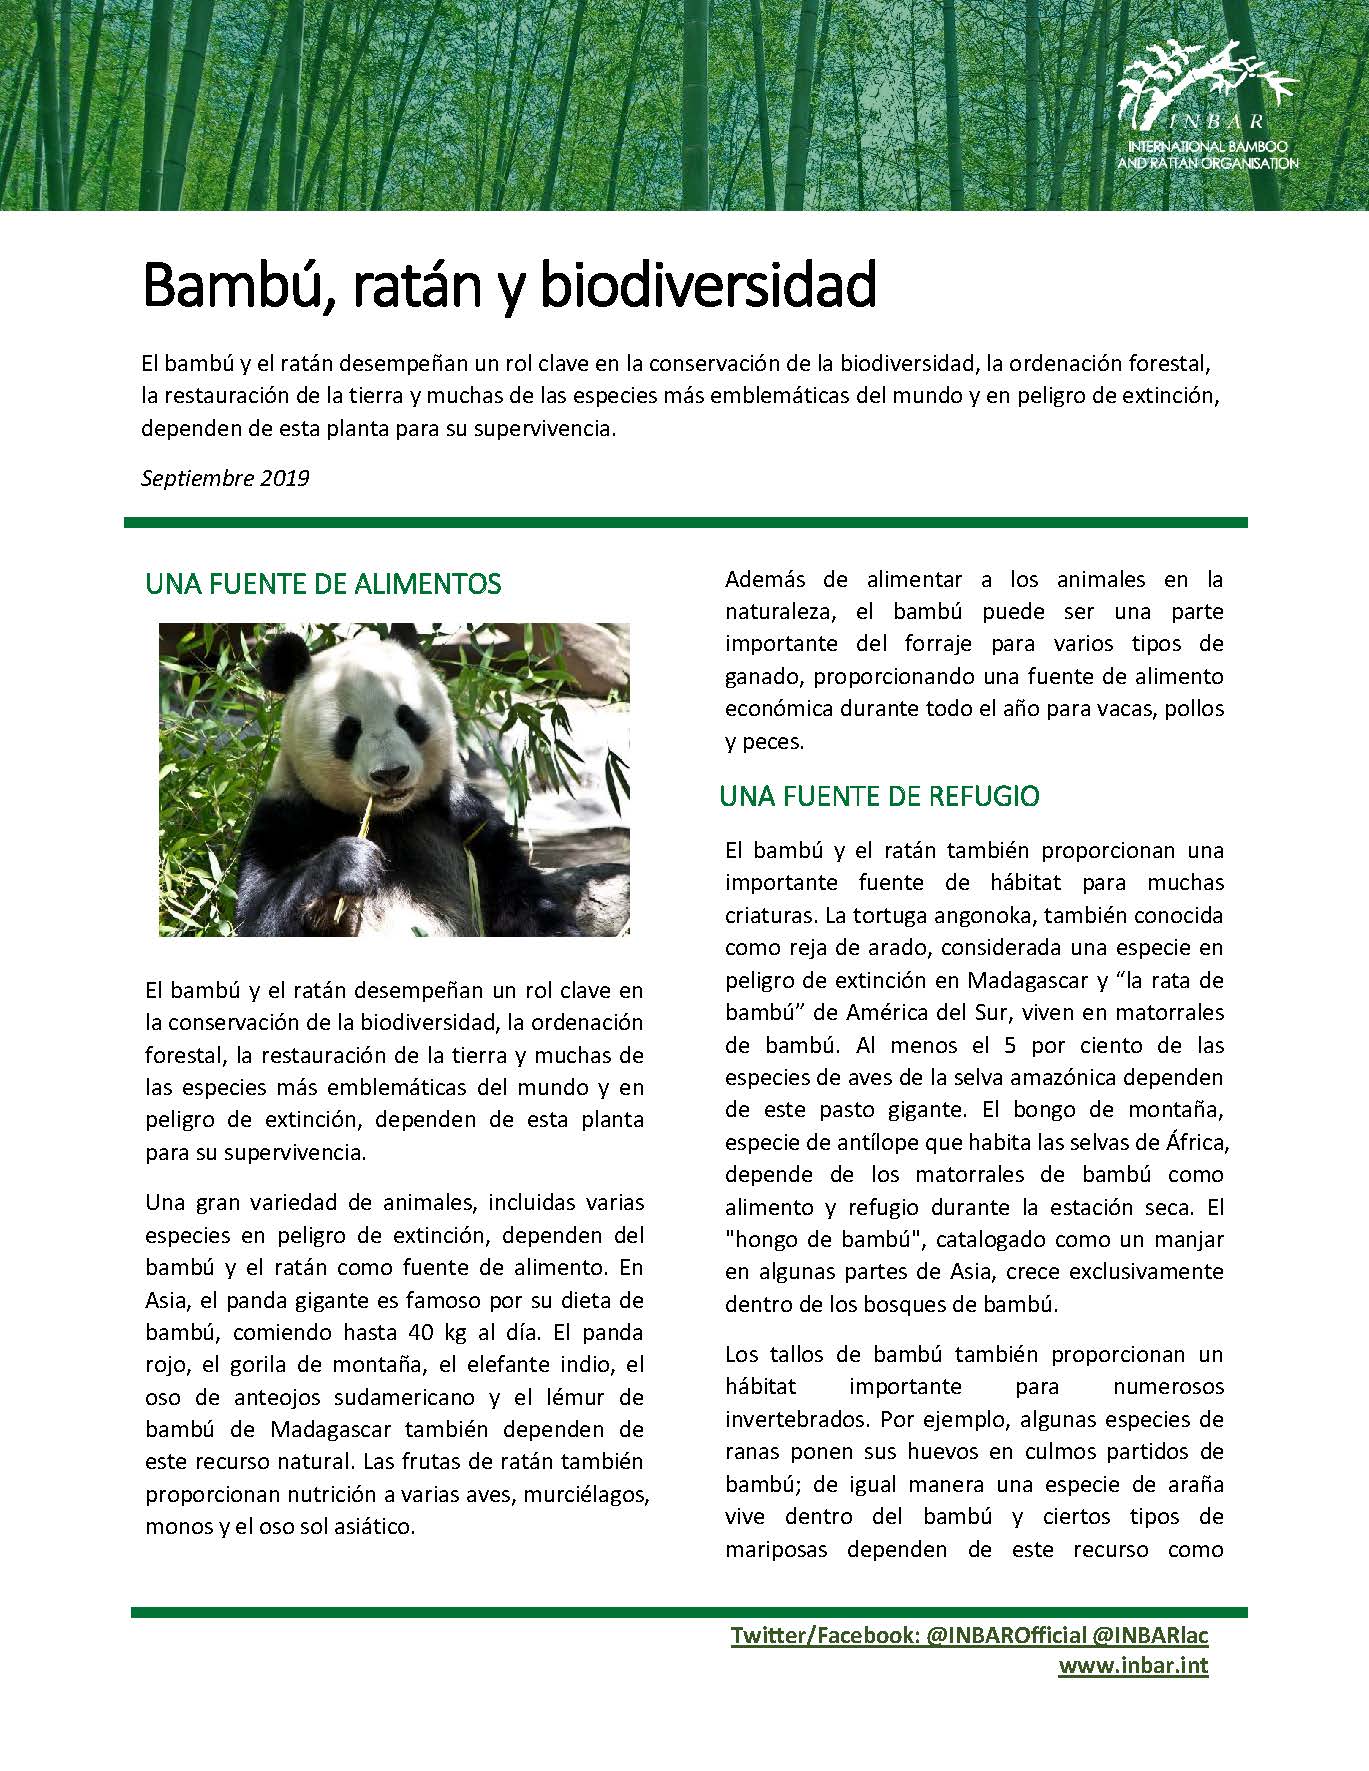 Bambú, ratán y biodiversidad: Hoja Informativa